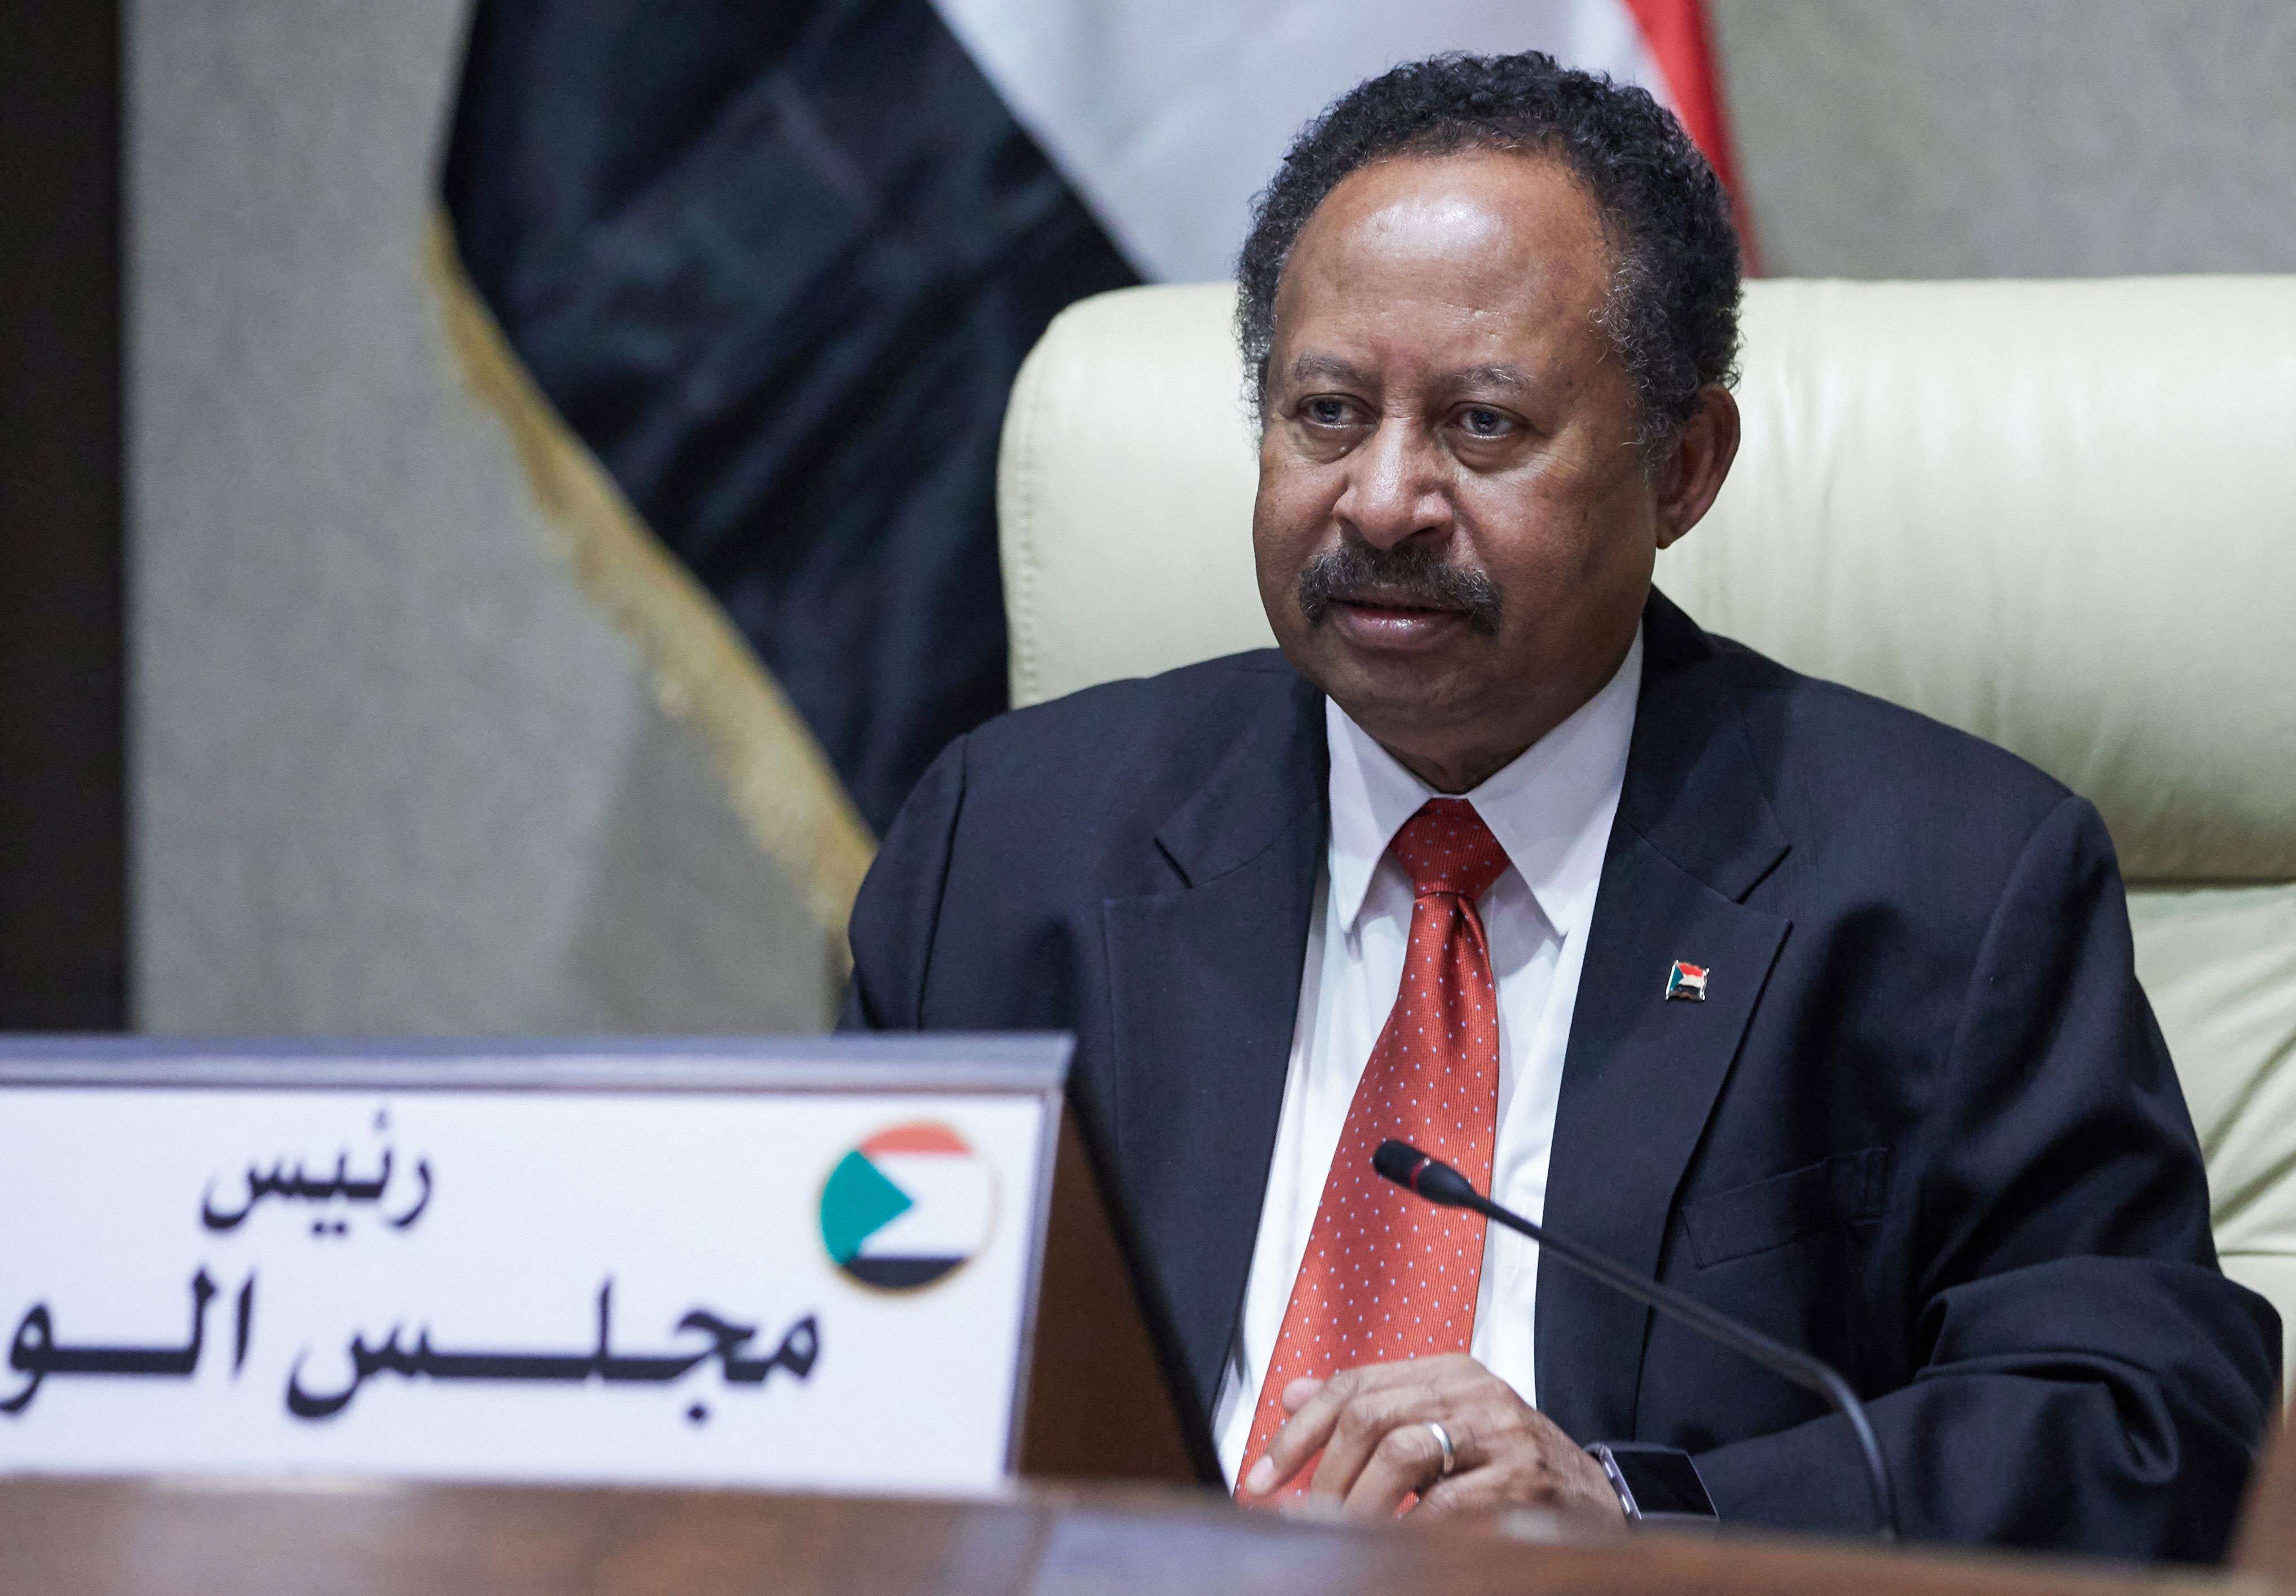 Sudan's Prime Minister Abdalla Hamdok chairs an emergency cabinet session in Khartoum, Sudan, on October 18.